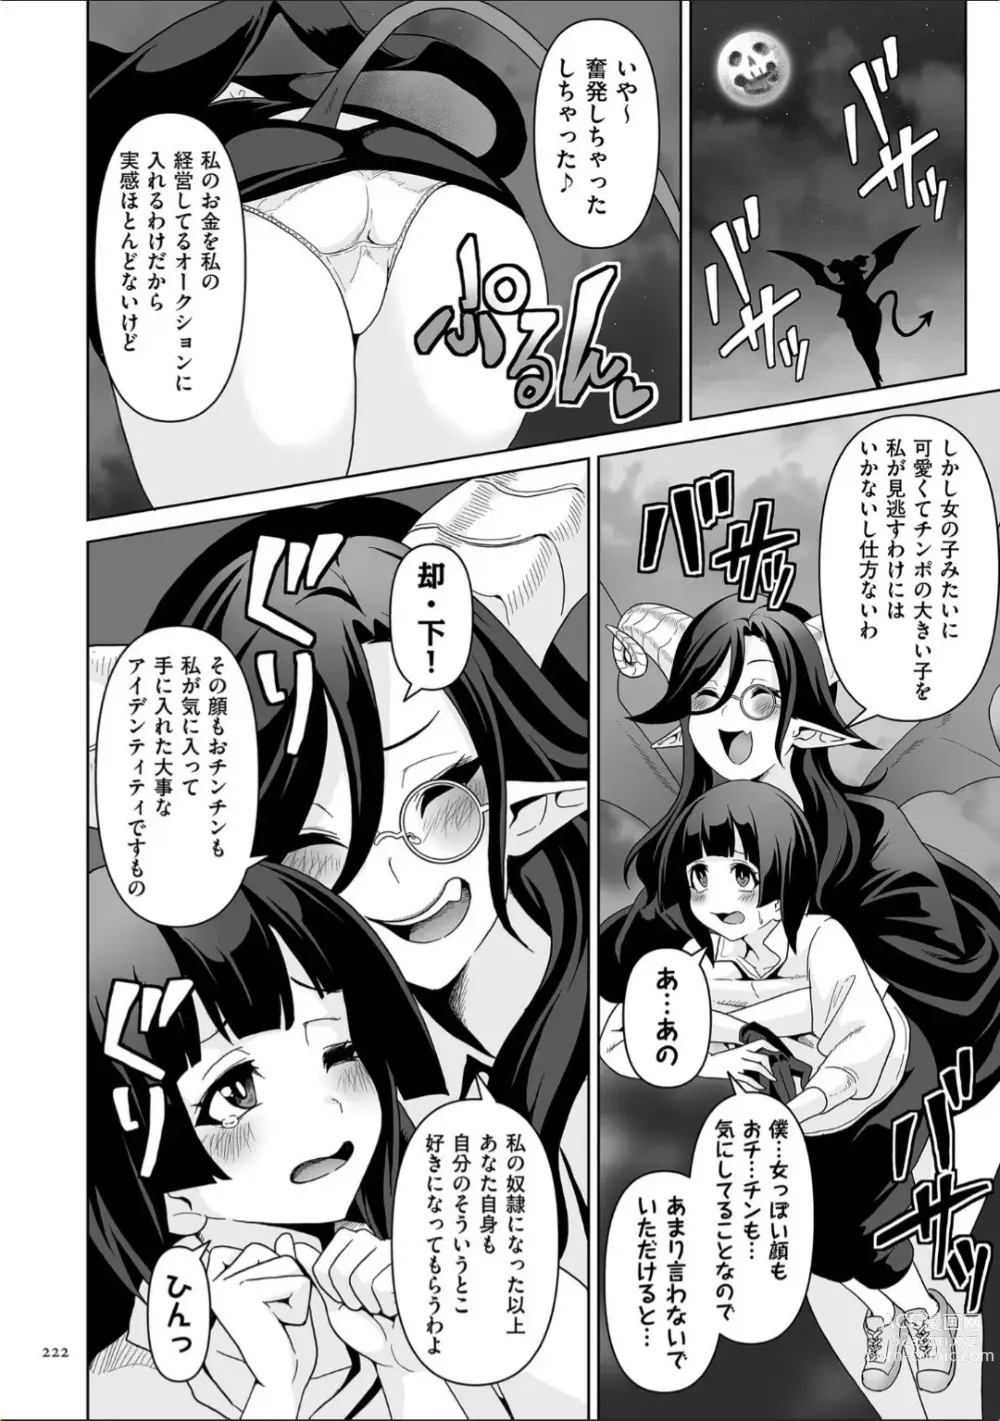 Page 222 of manga Succubus Kingdom